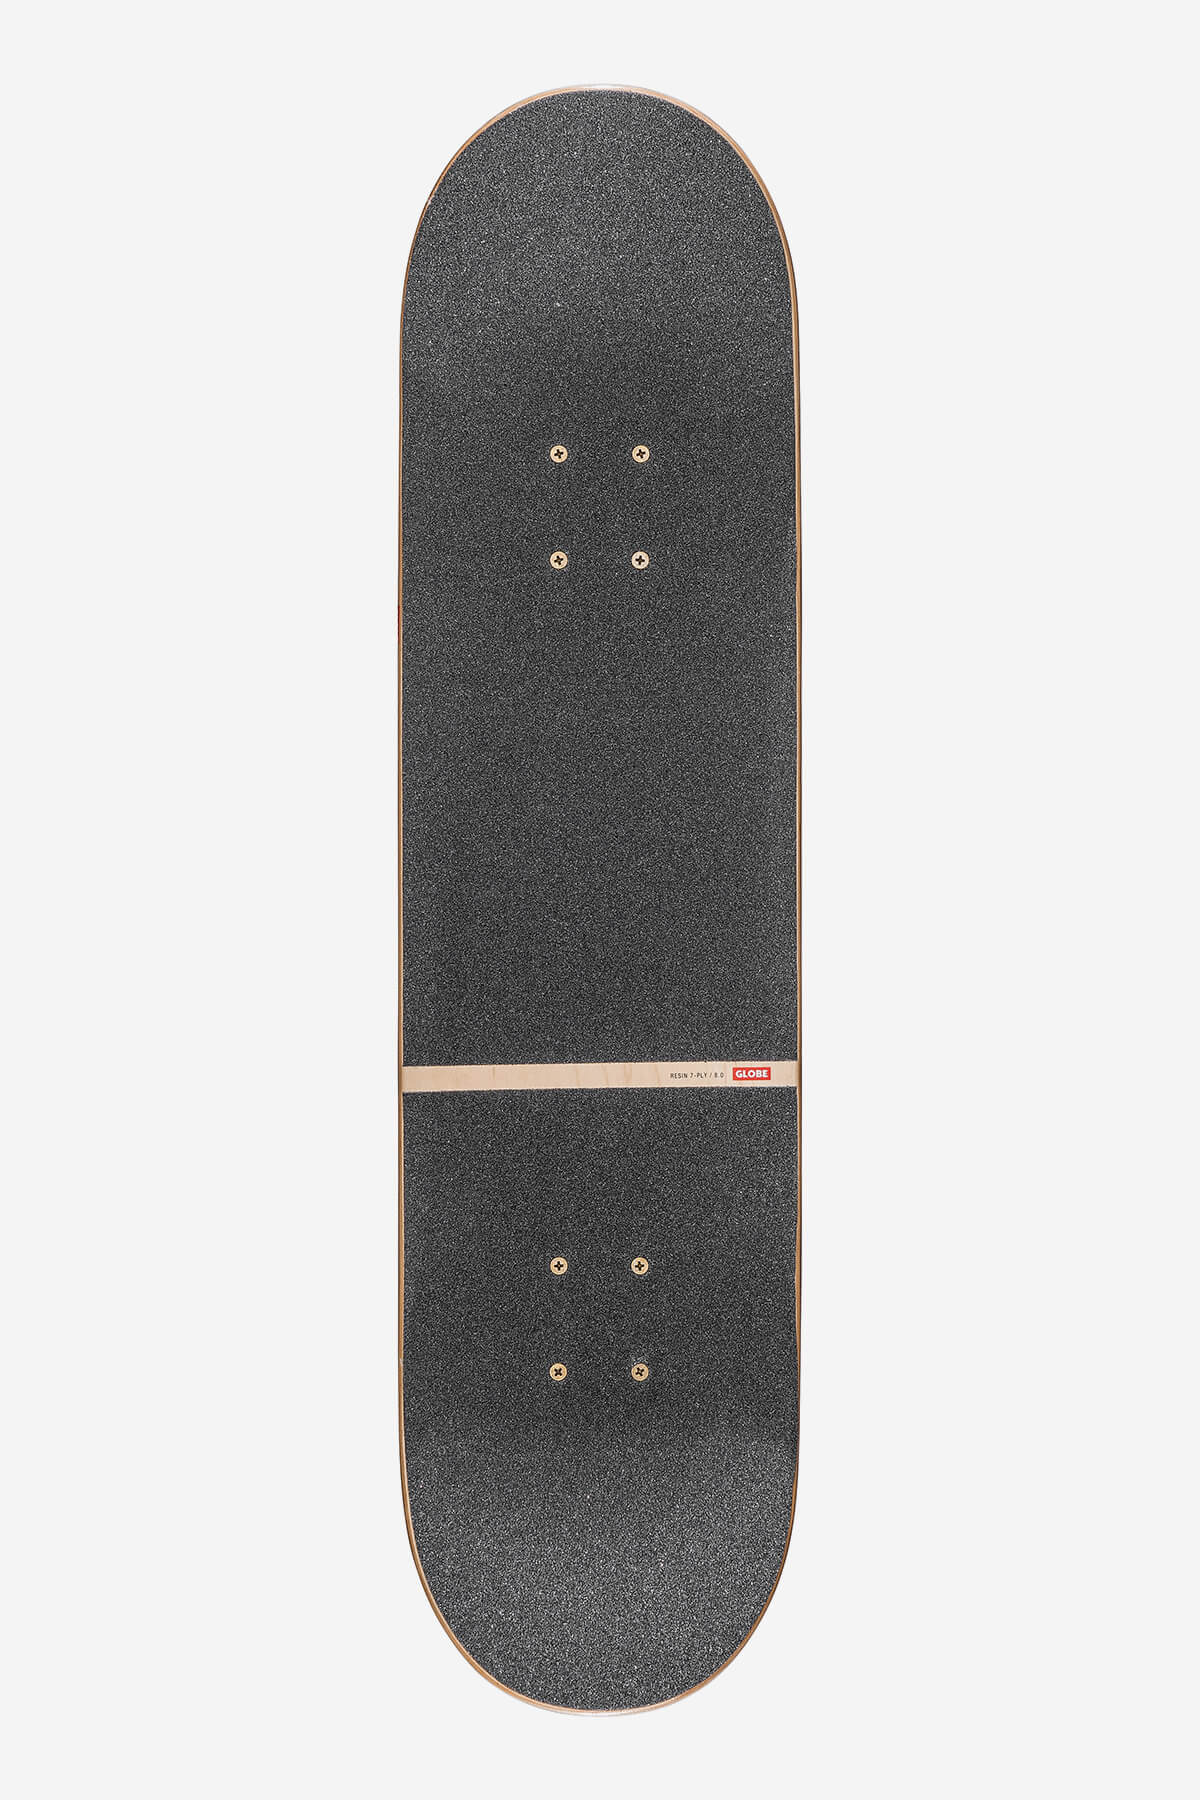 g3 bar nero 8,0" completo skateboard